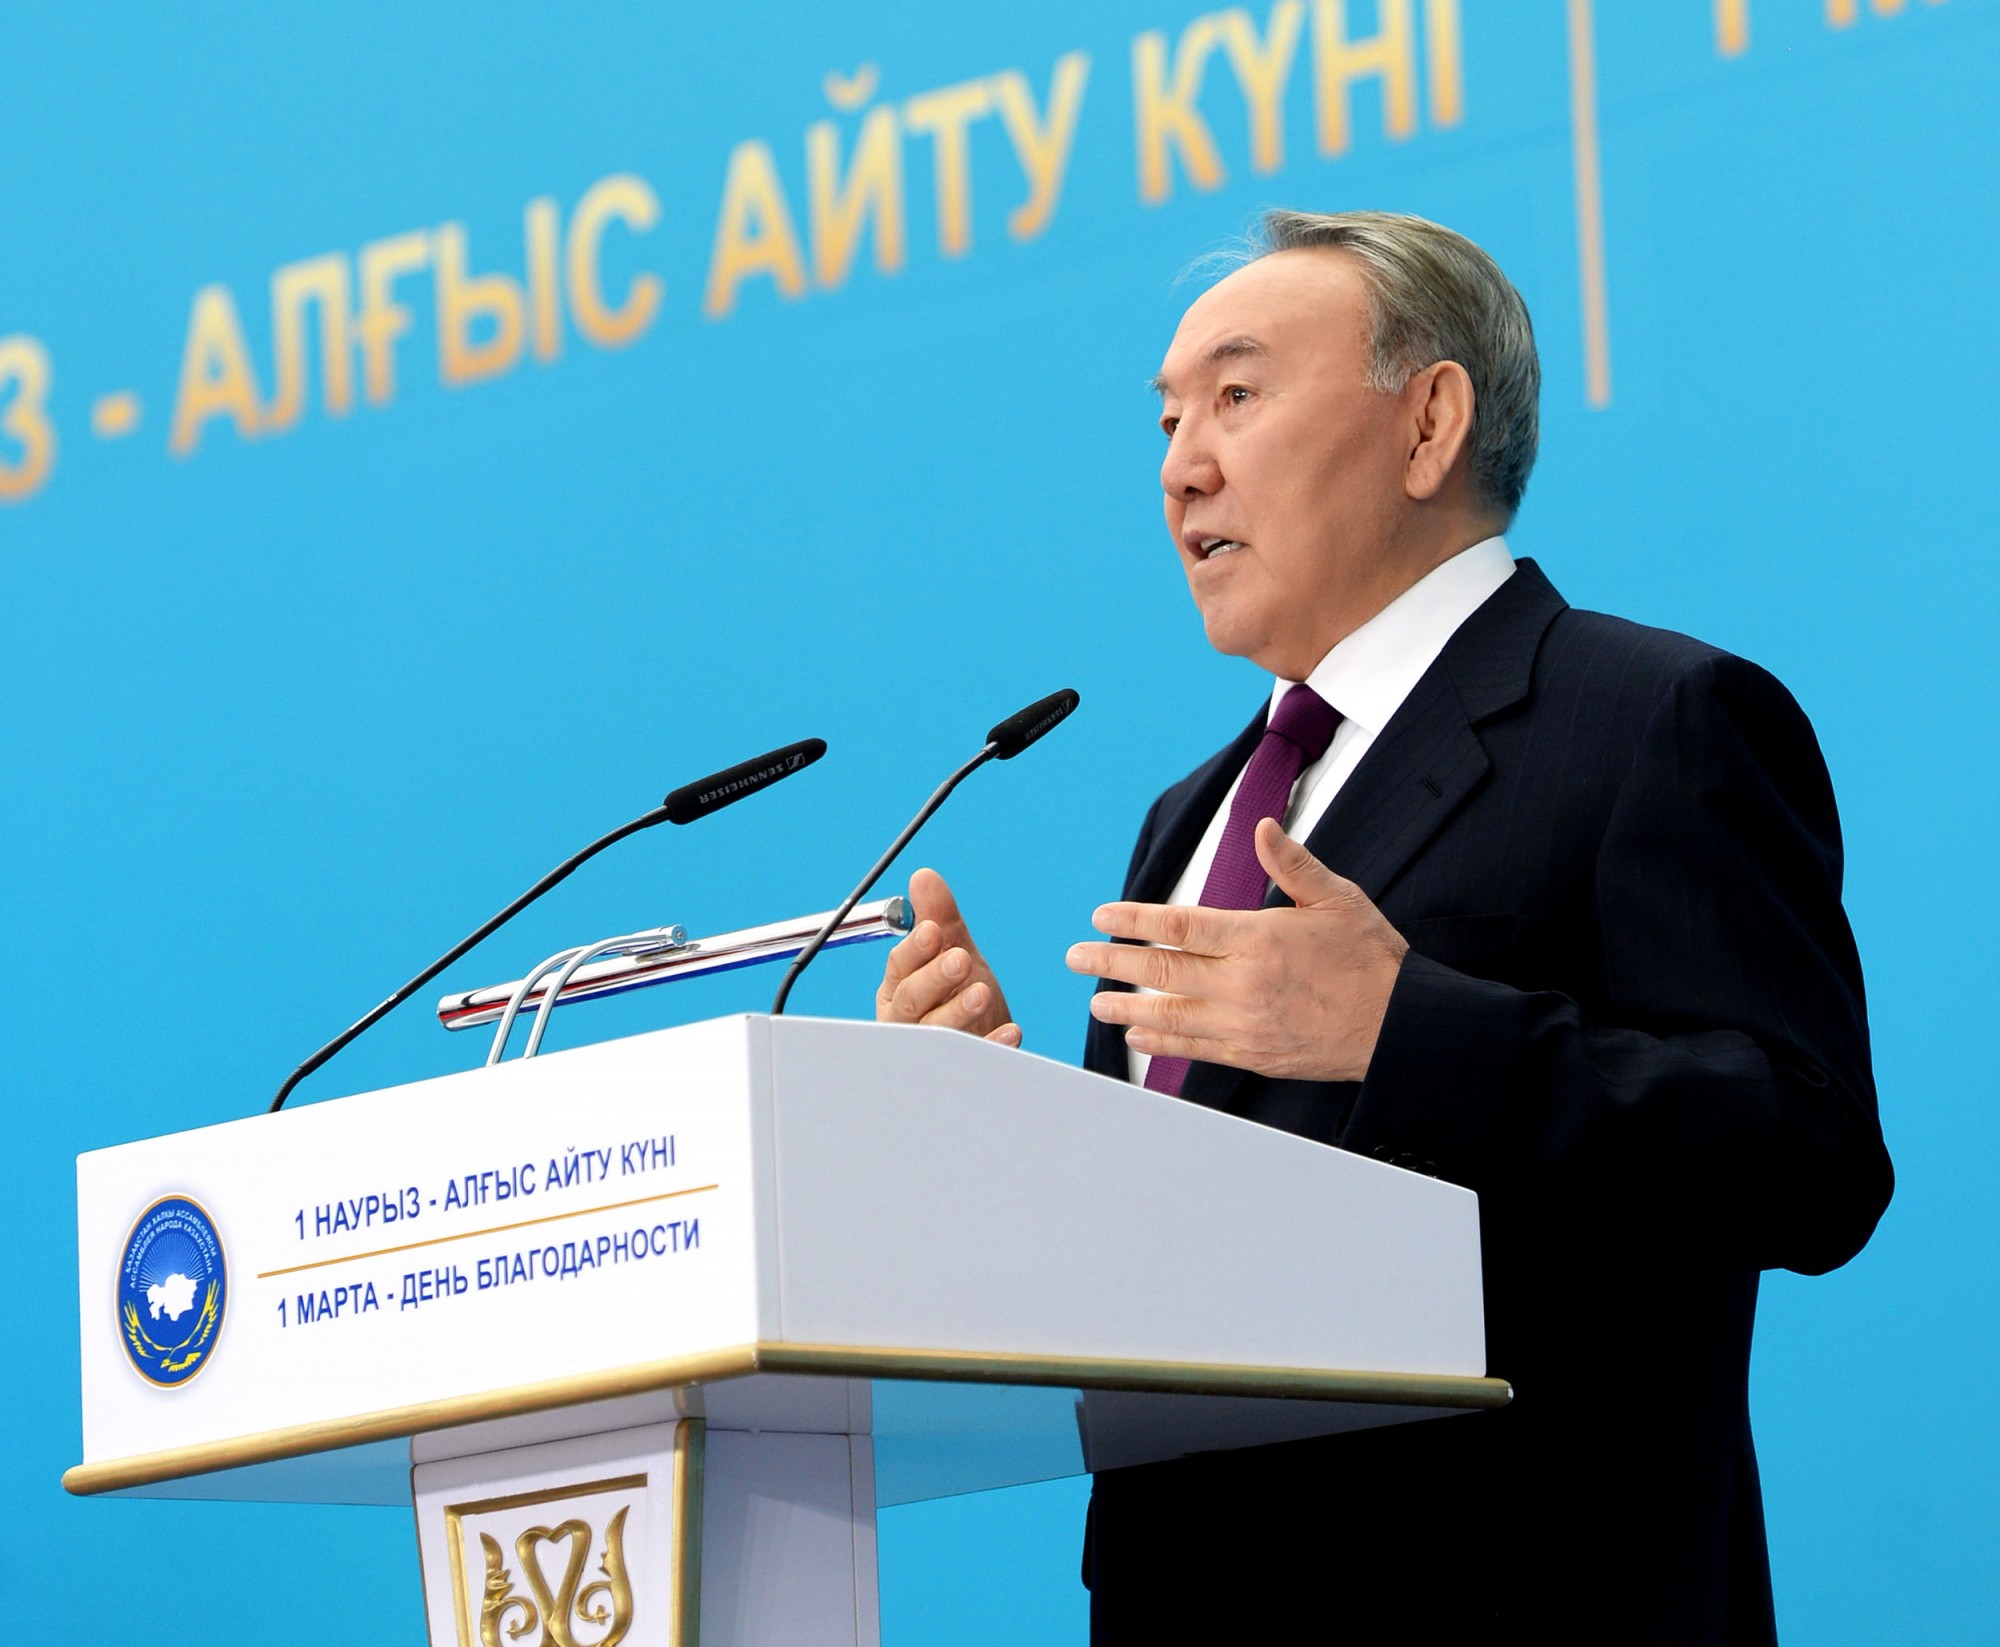 Nursultan Nazarbayev congratulates Kazakhstanis on the Day of Gratitude